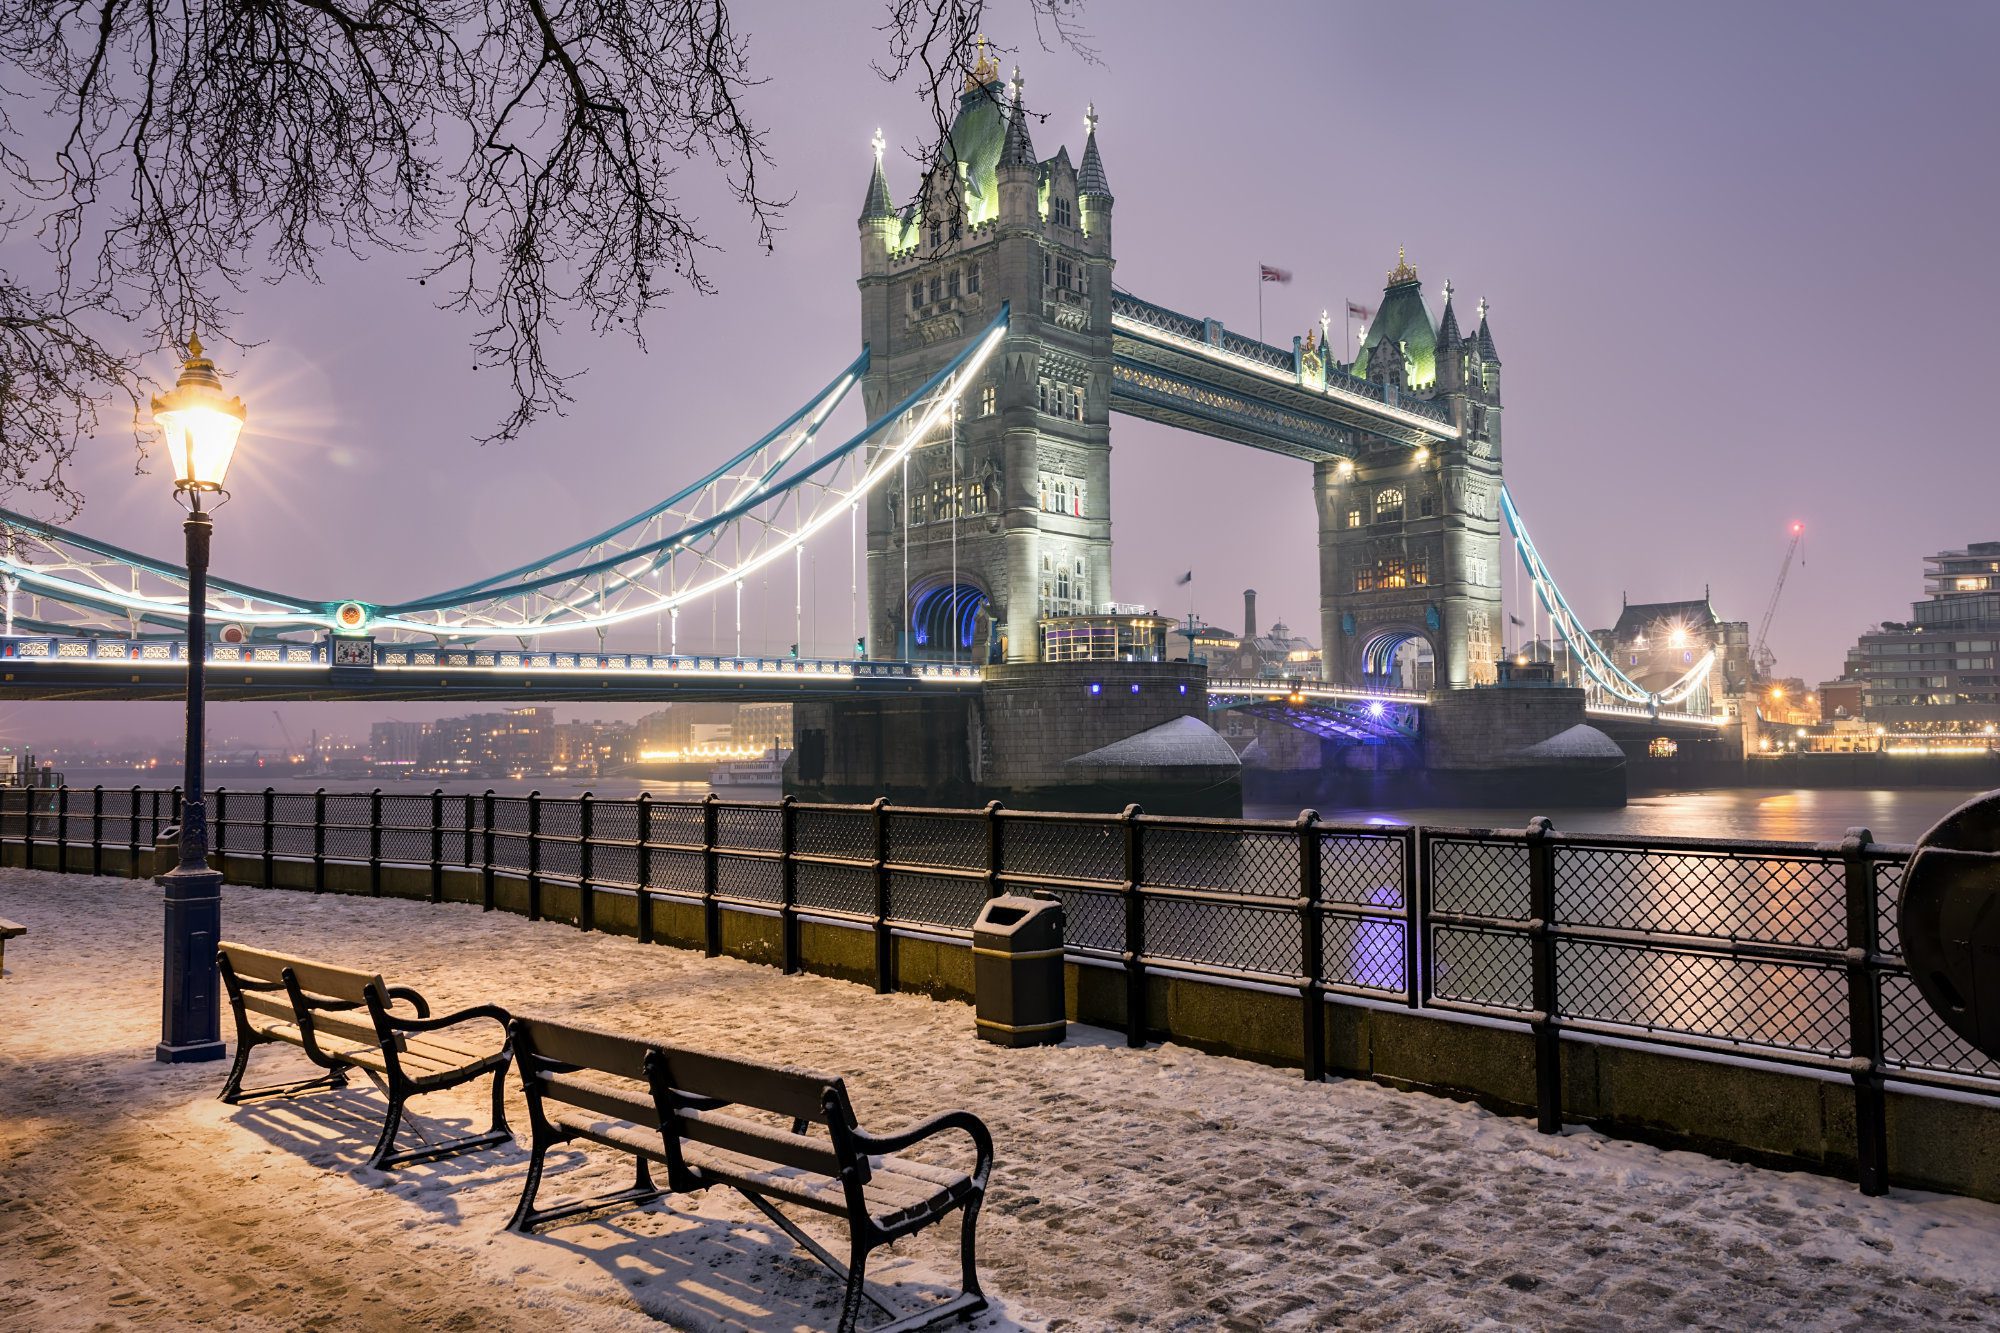 London bridge at night